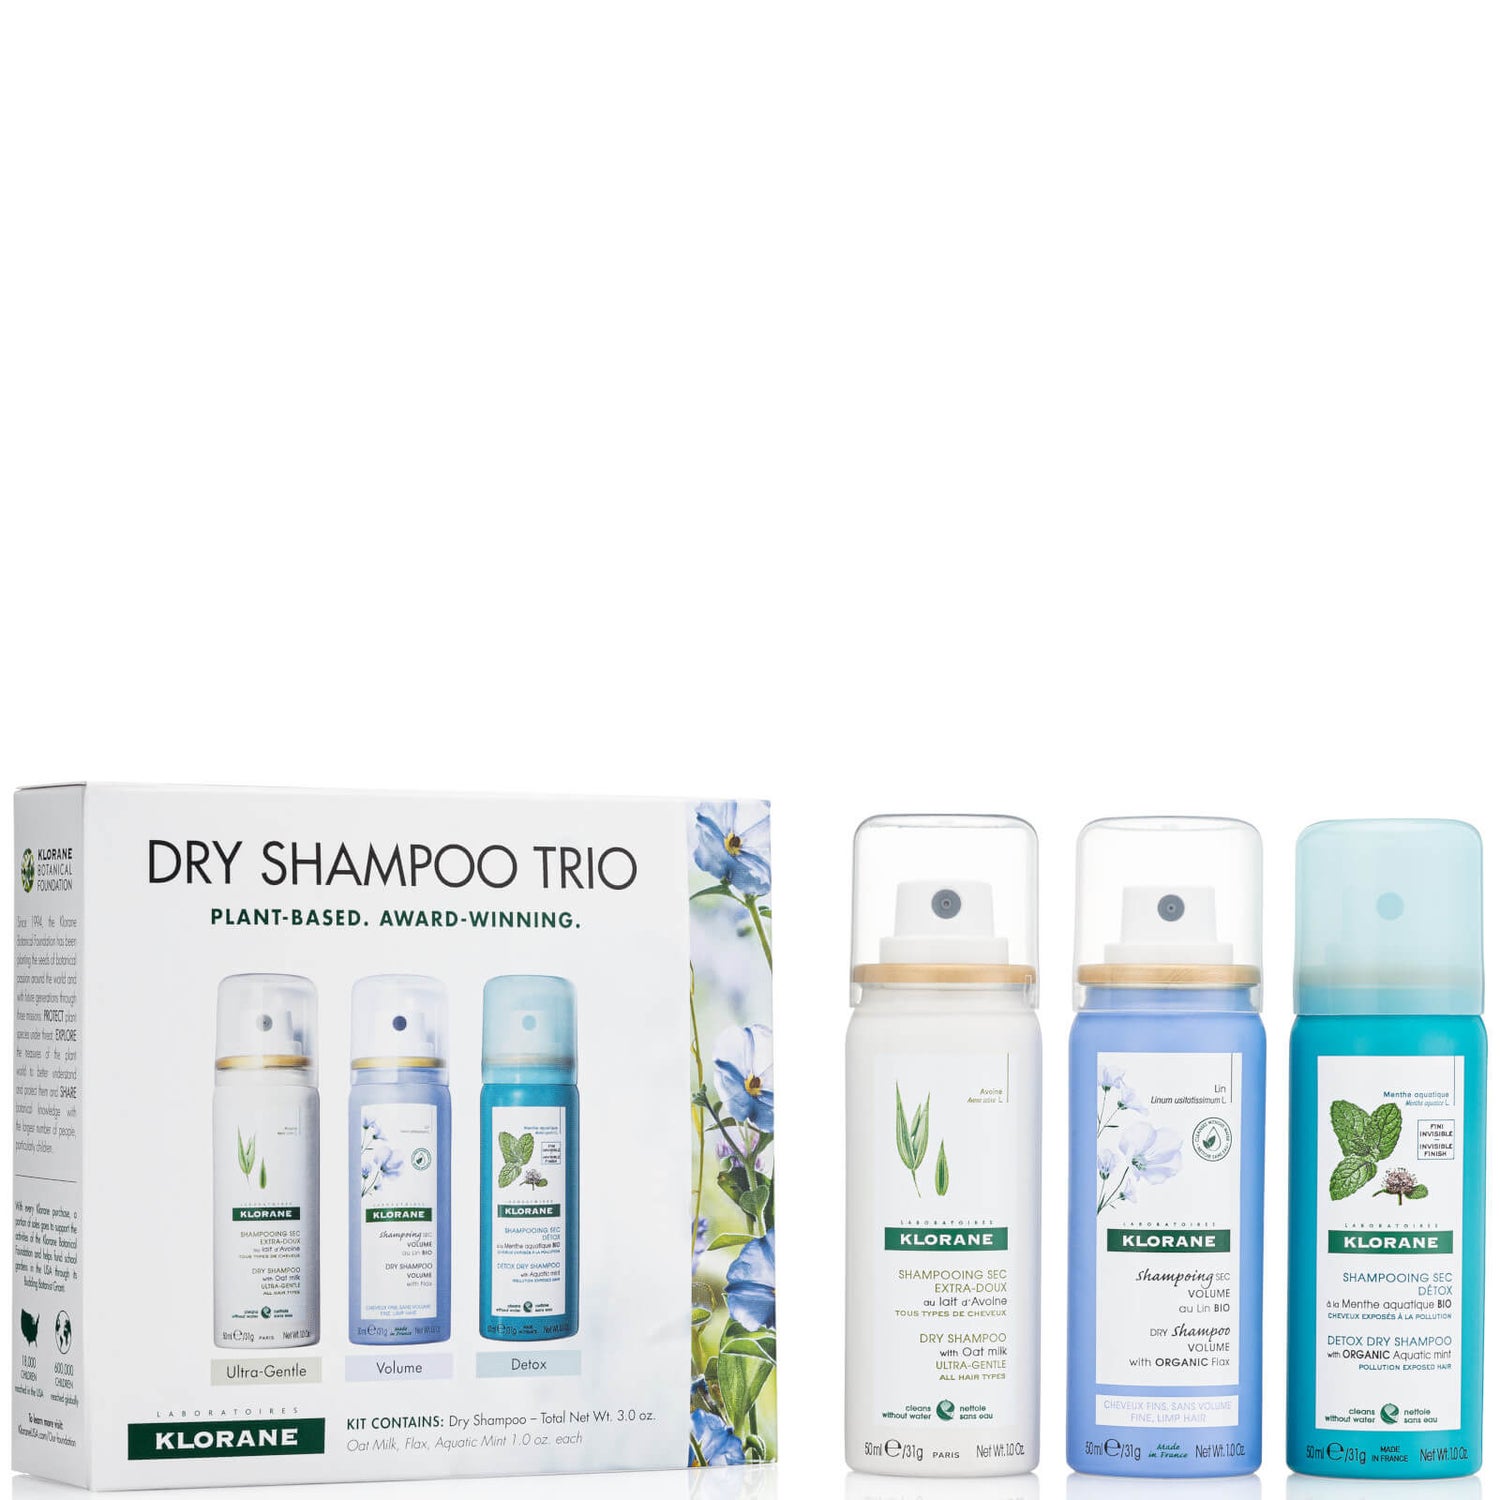 KLORANE Dry Shampoo Discovery Set (Worth $30.00)